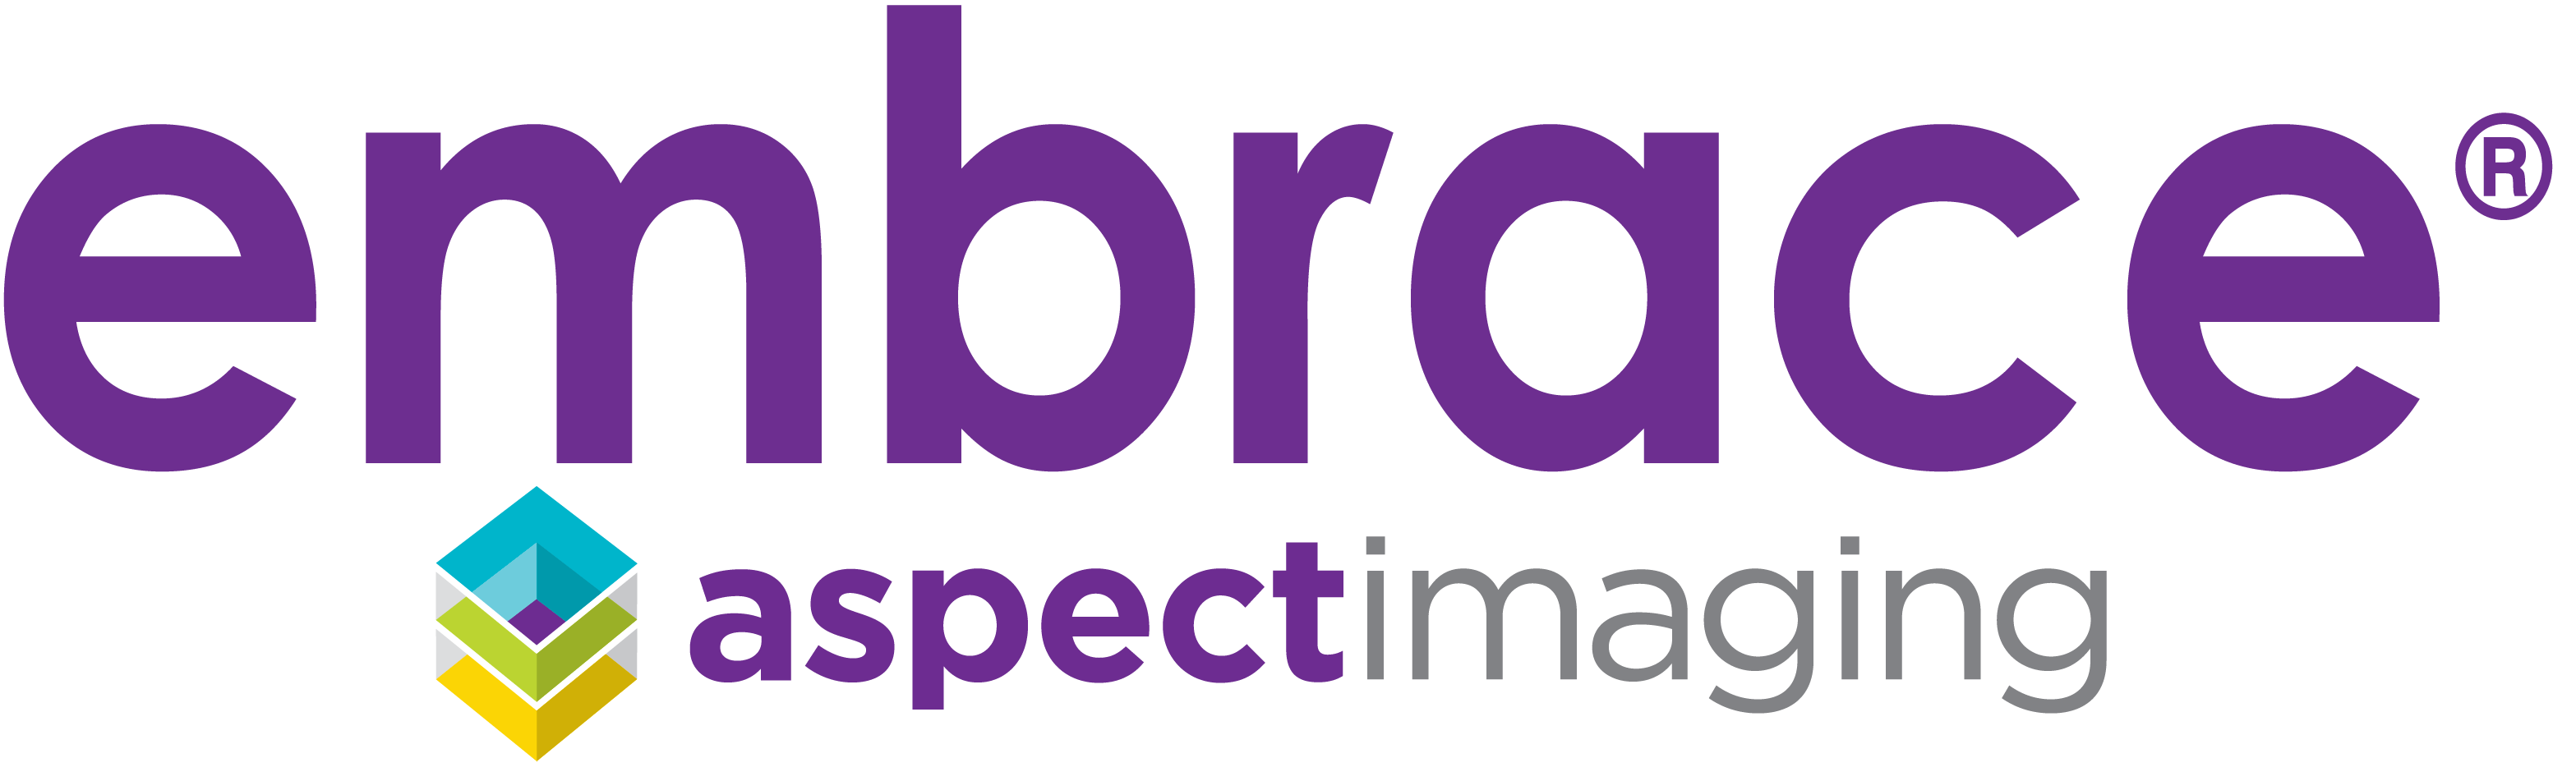 embrace aspect imaging logo